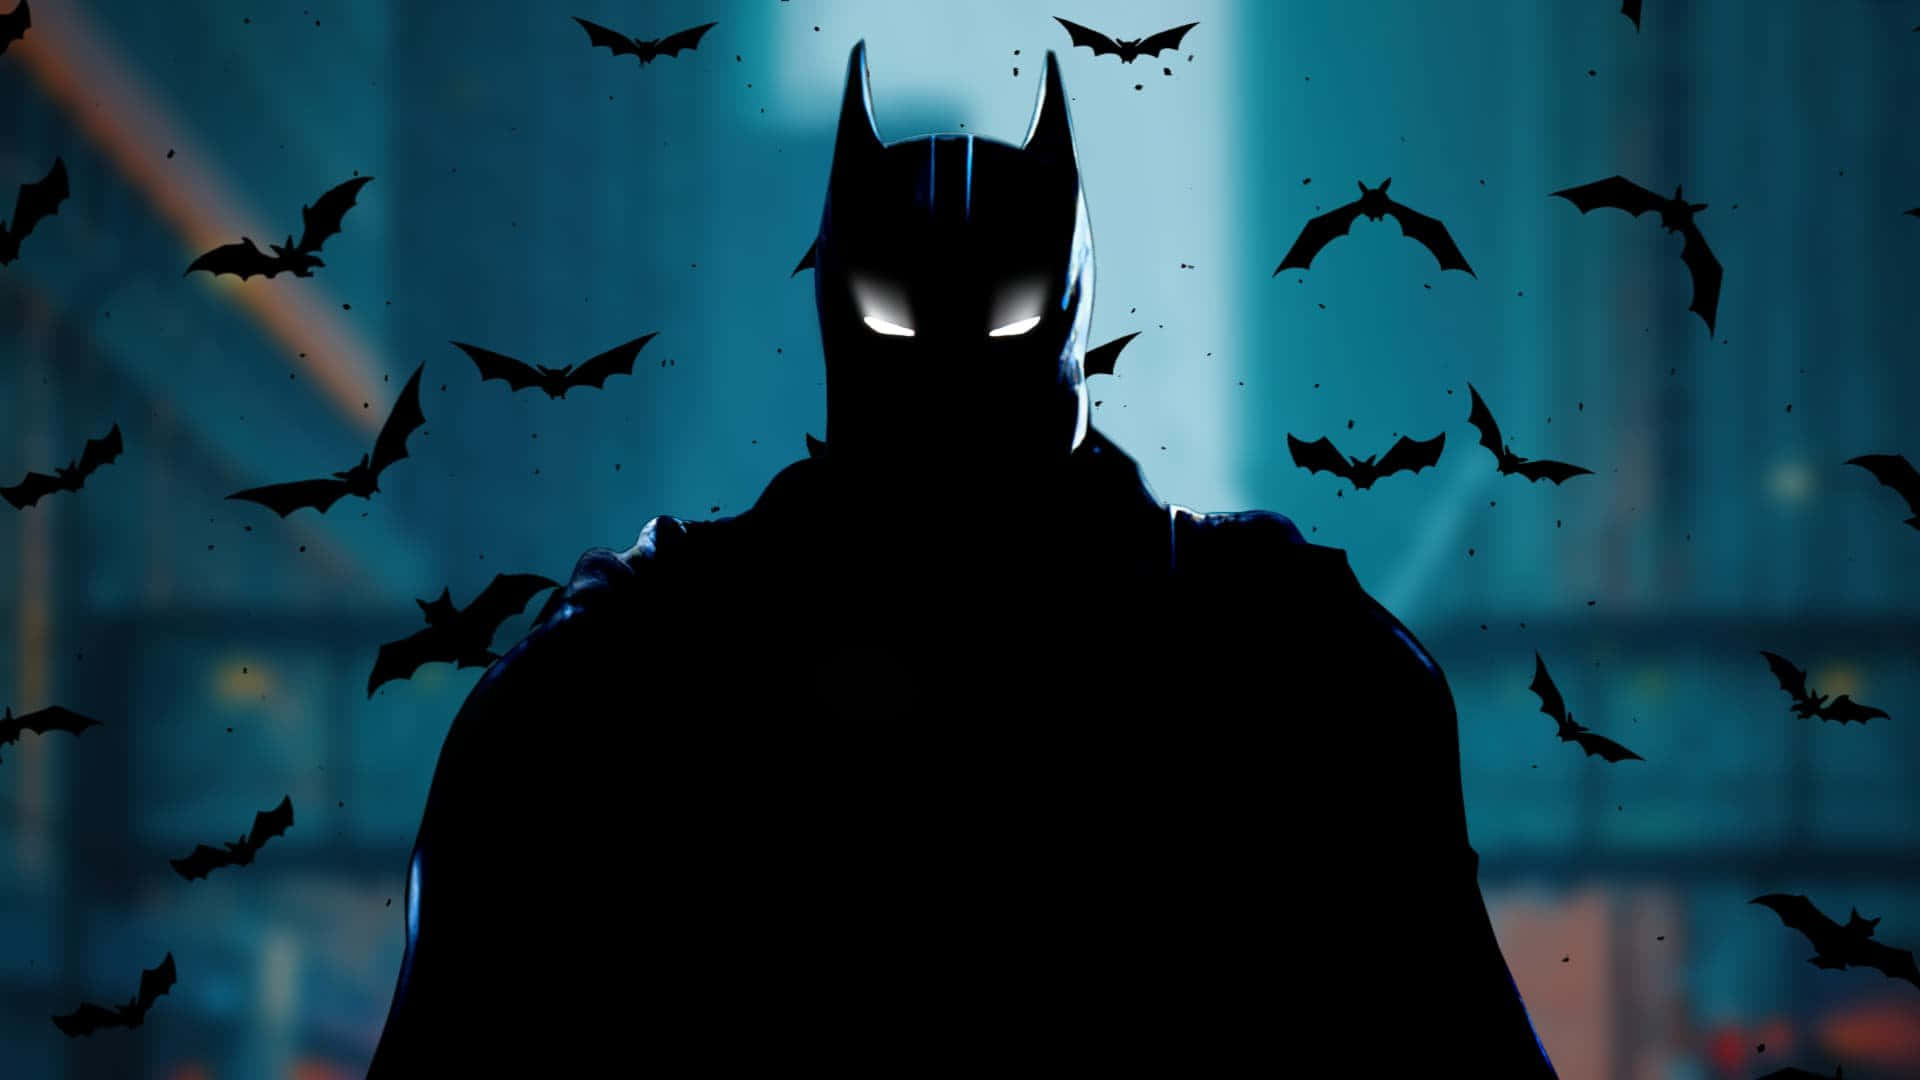 Dark Knight Silhouettewith Bats Wallpaper